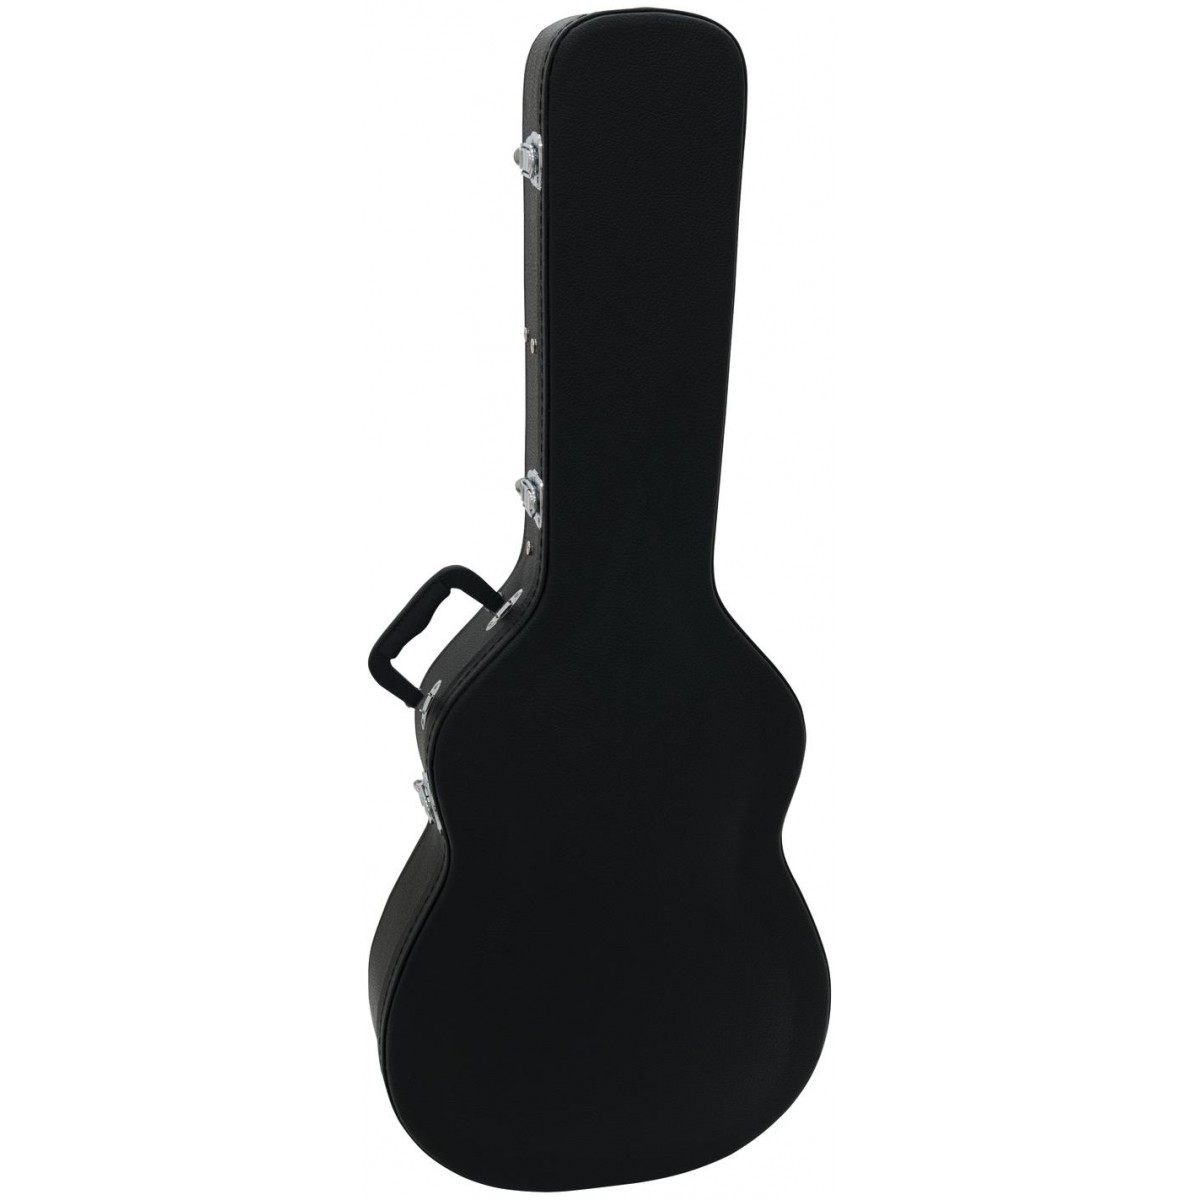 Dimavery tvarovaný kufr pro westernovou kytaru, černý